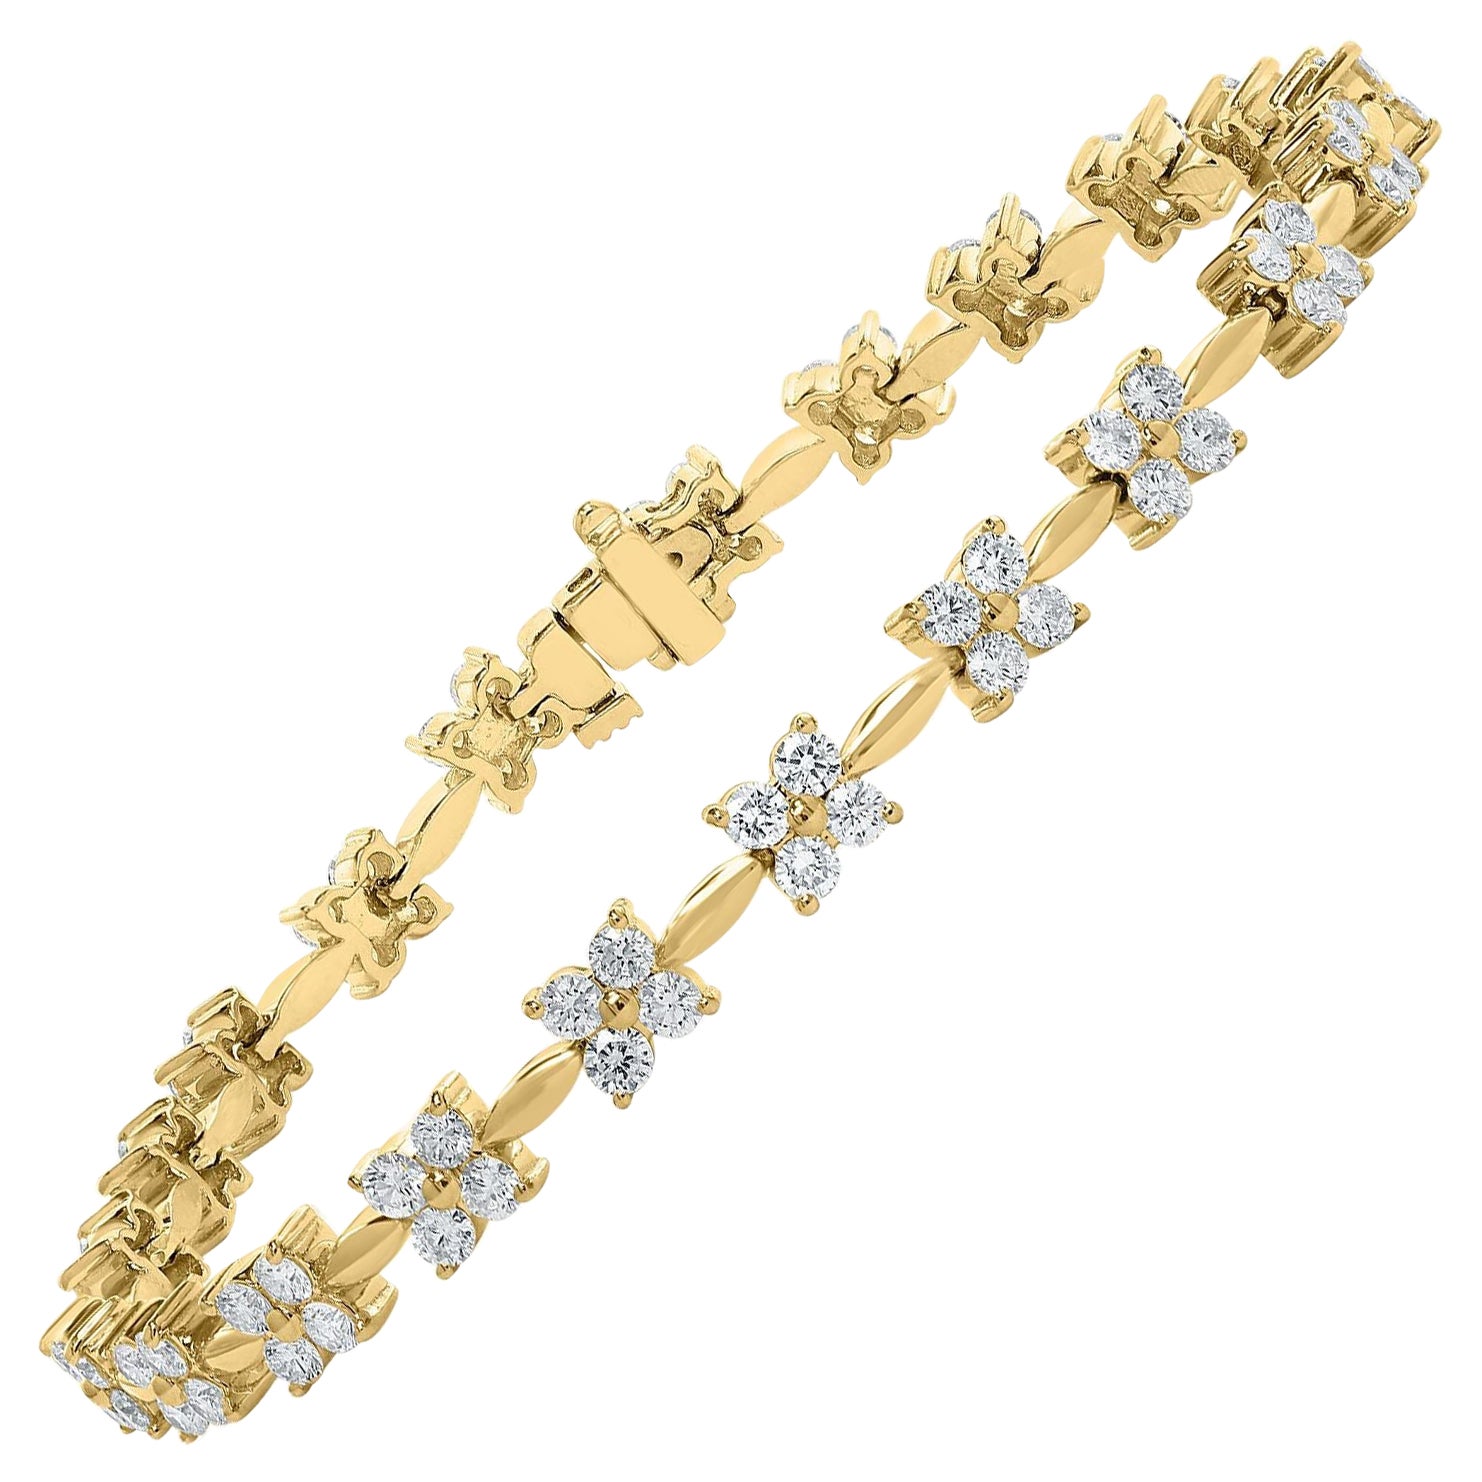 3.02 Carat Round Diamond Tennis Bracelet in 14K Yellow Gold For Sale